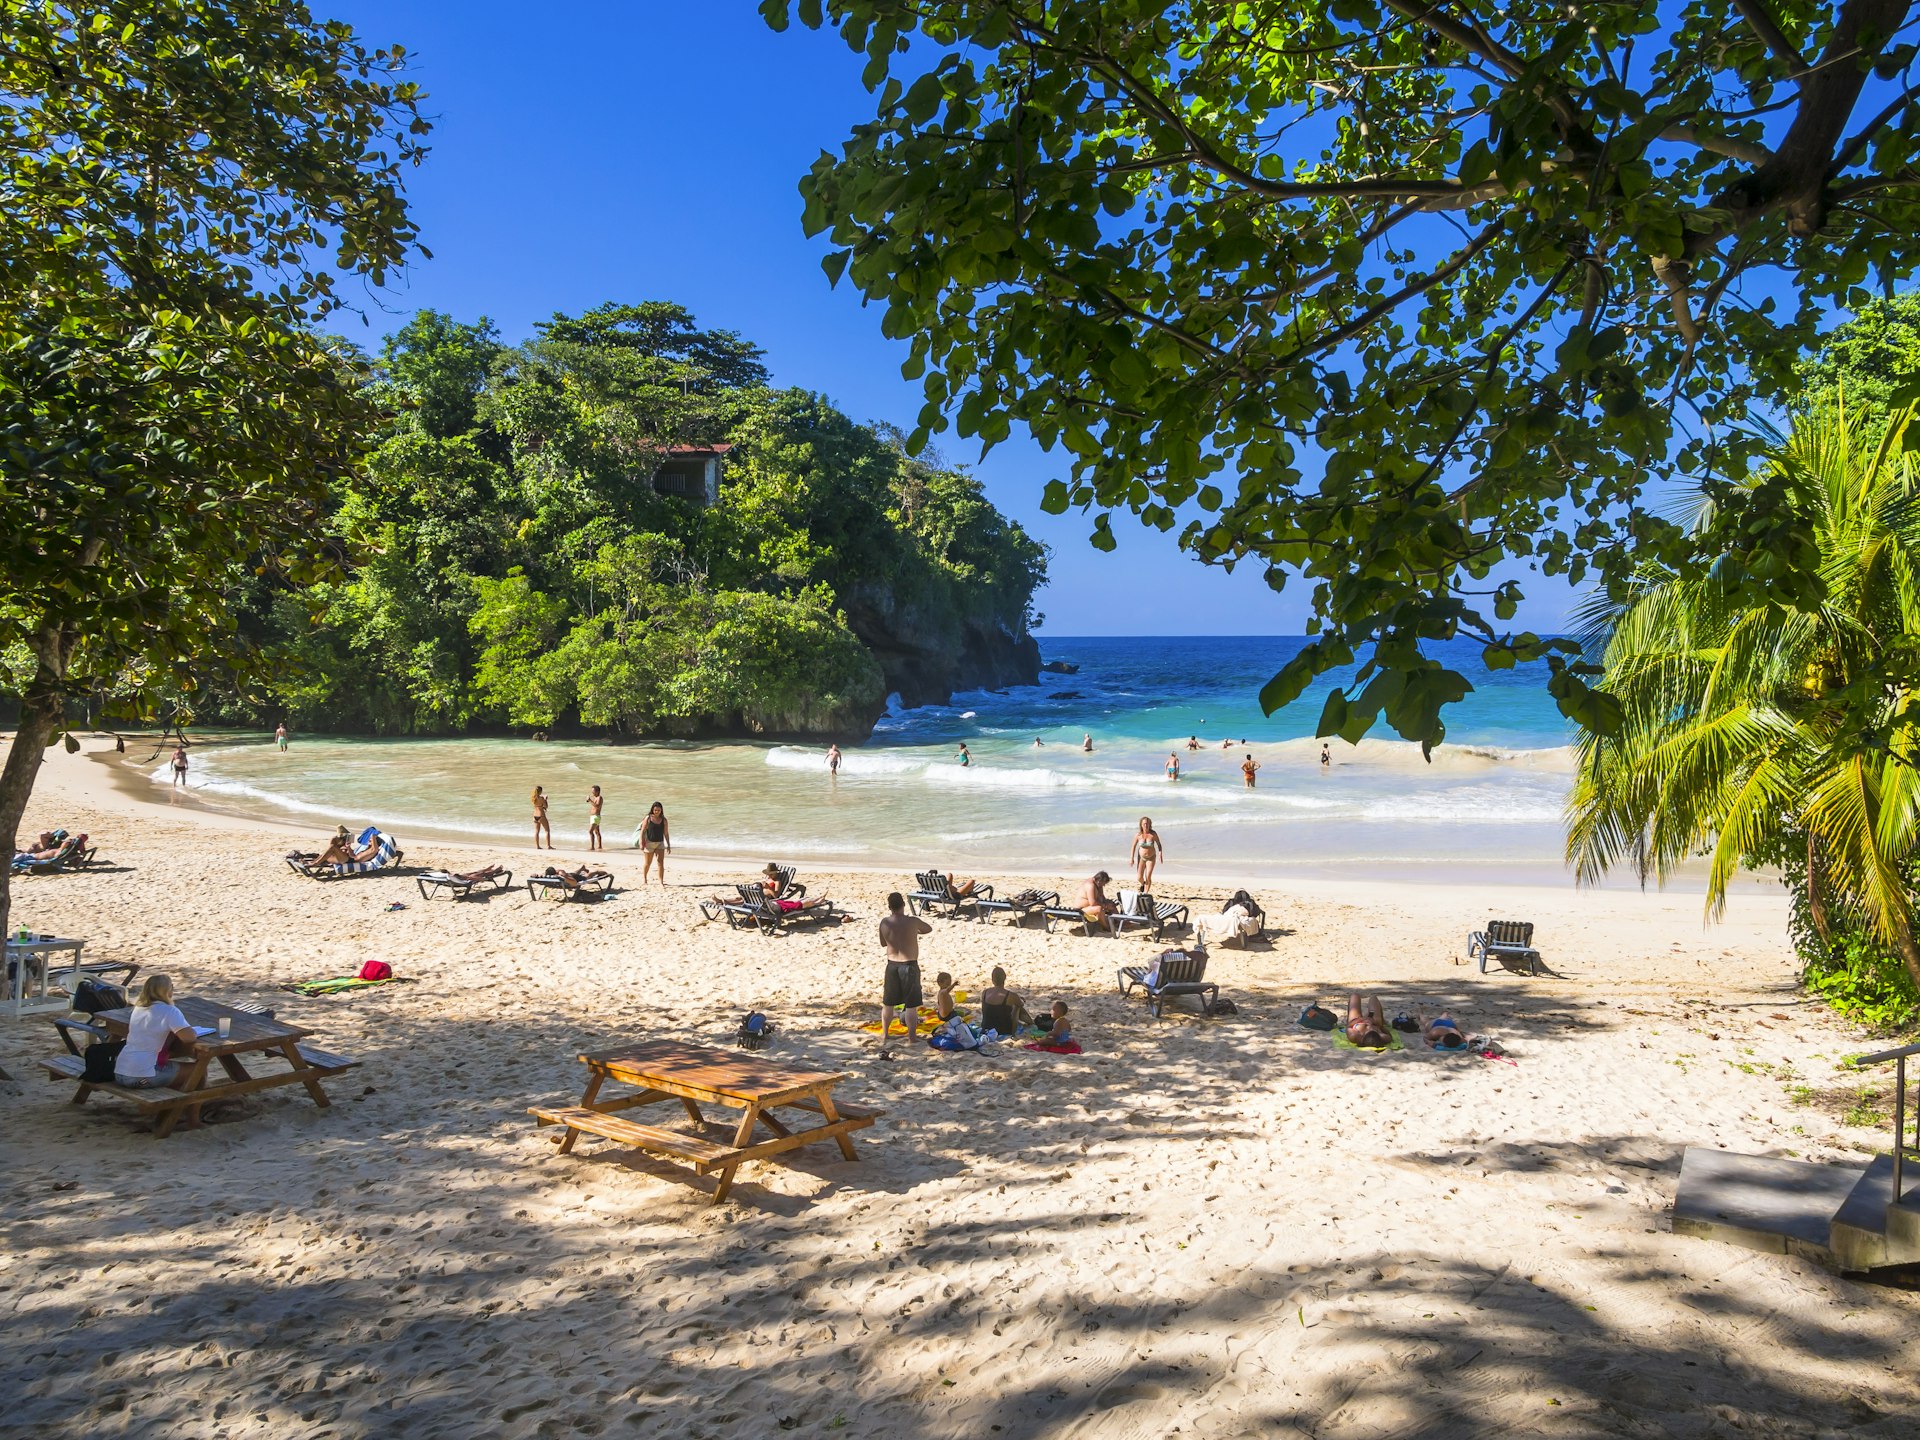 Beachgoers enjoy the sunshine at Frenchman's Cove, Jamaica